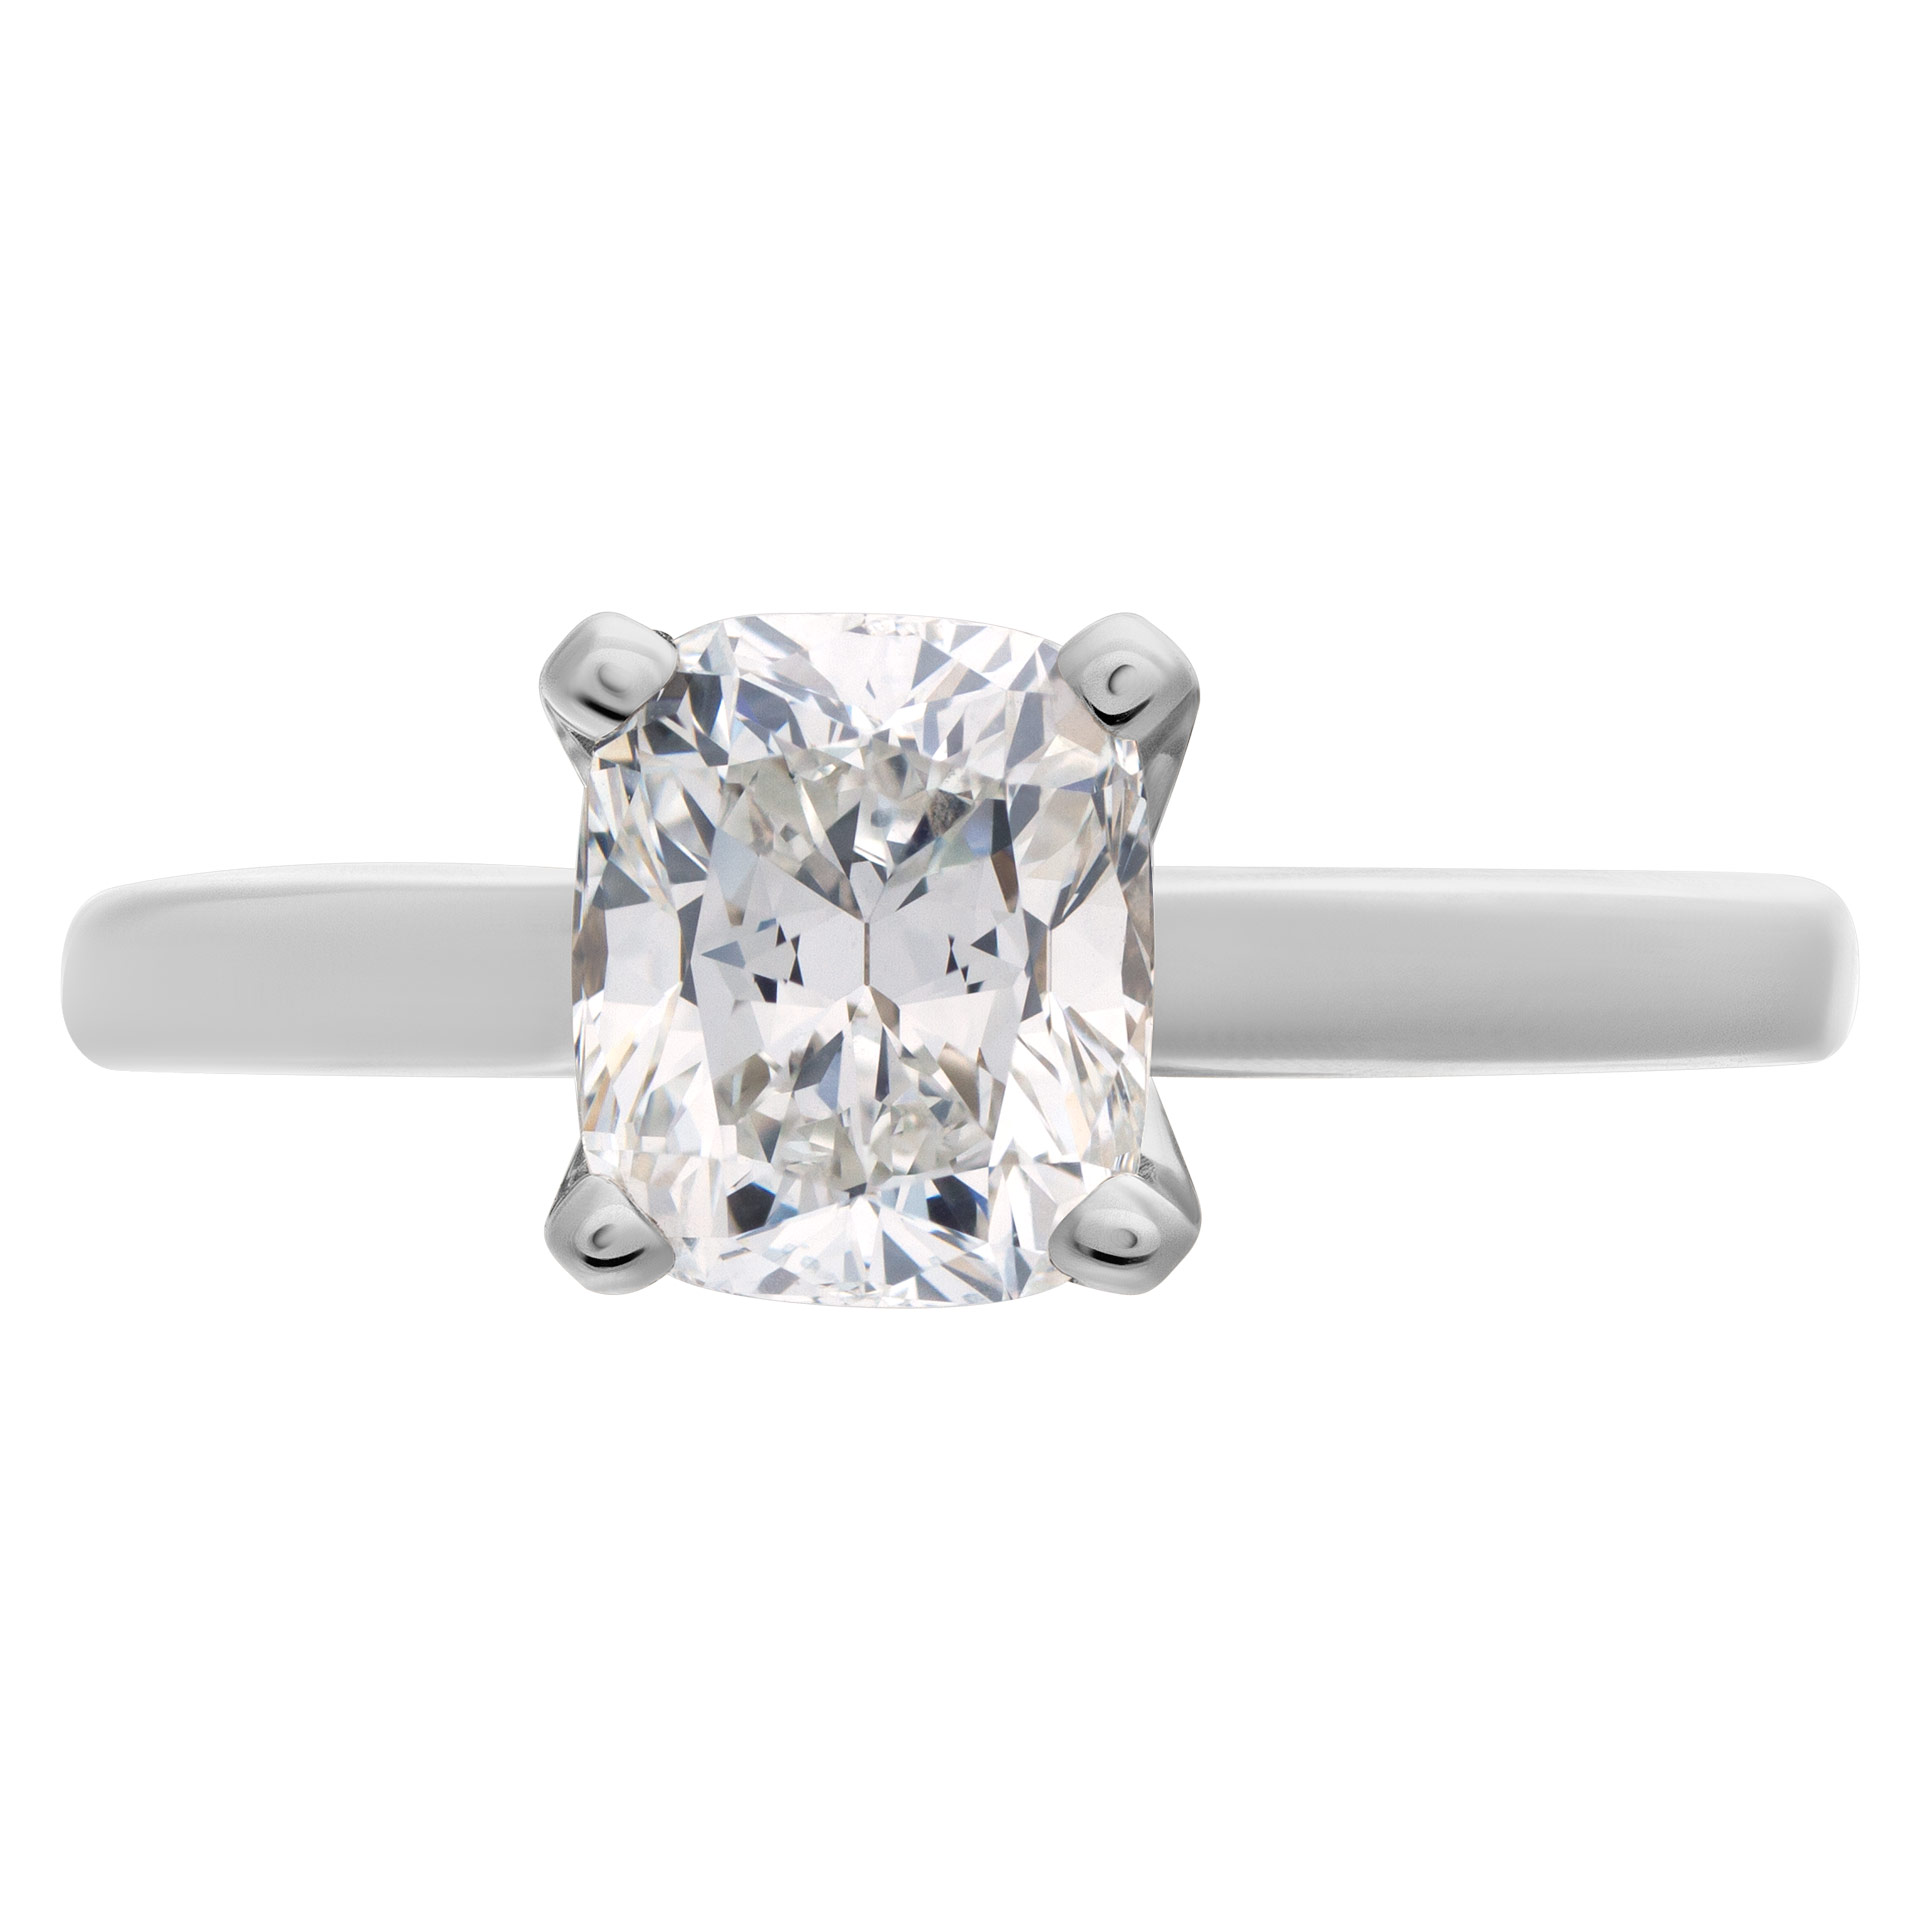 GIA certified cushion brilliant cut diamond 1.55 carat (H color, VS2 clarity) ring image 1